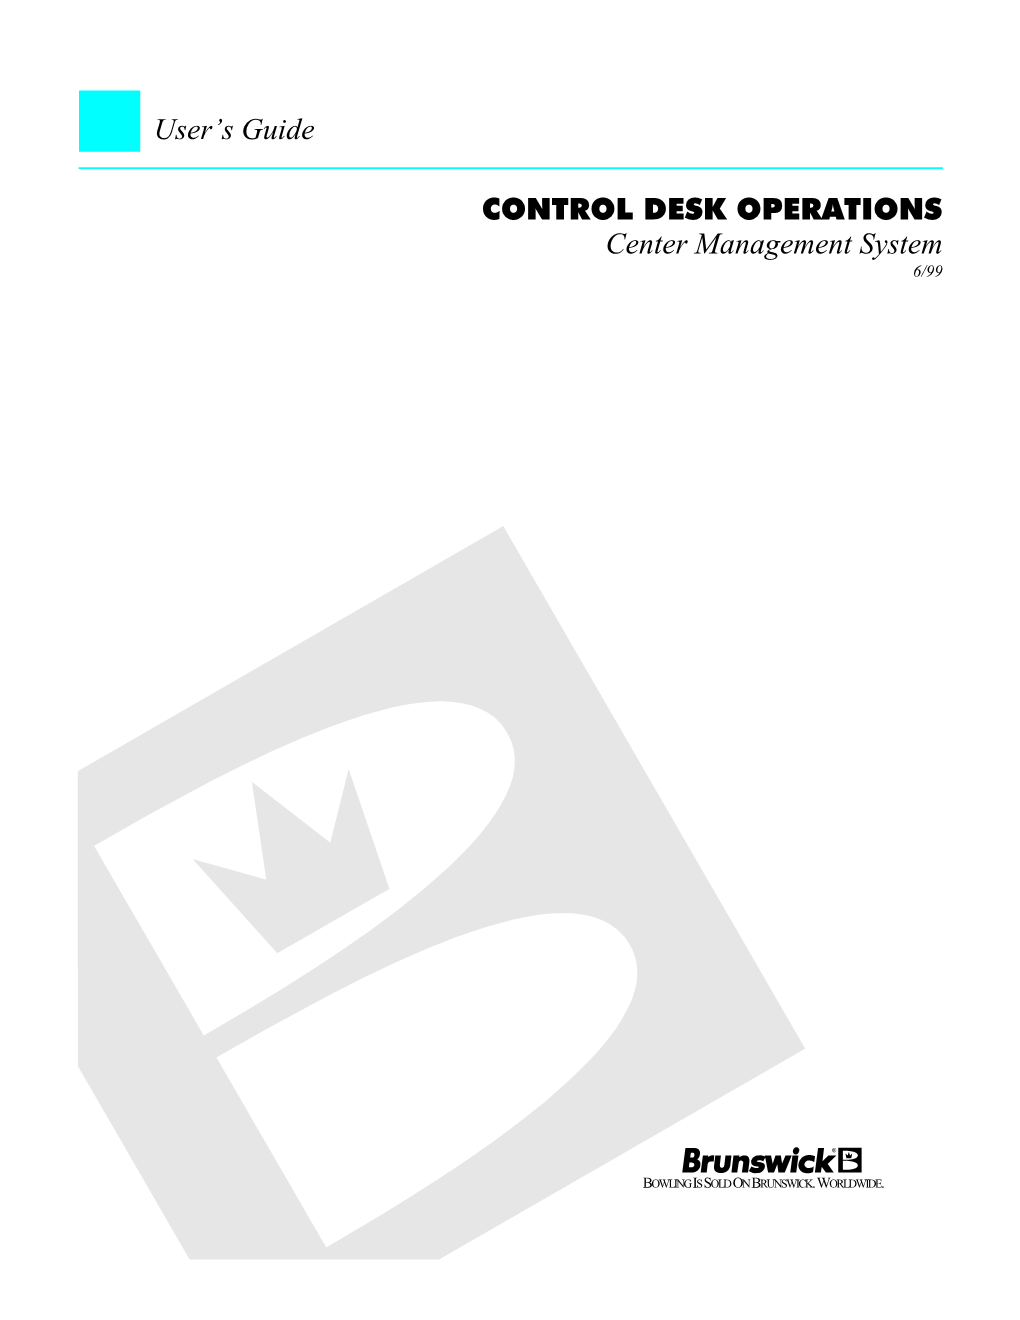 User's Guide CONTROL DESK OPERATIONS Center Management